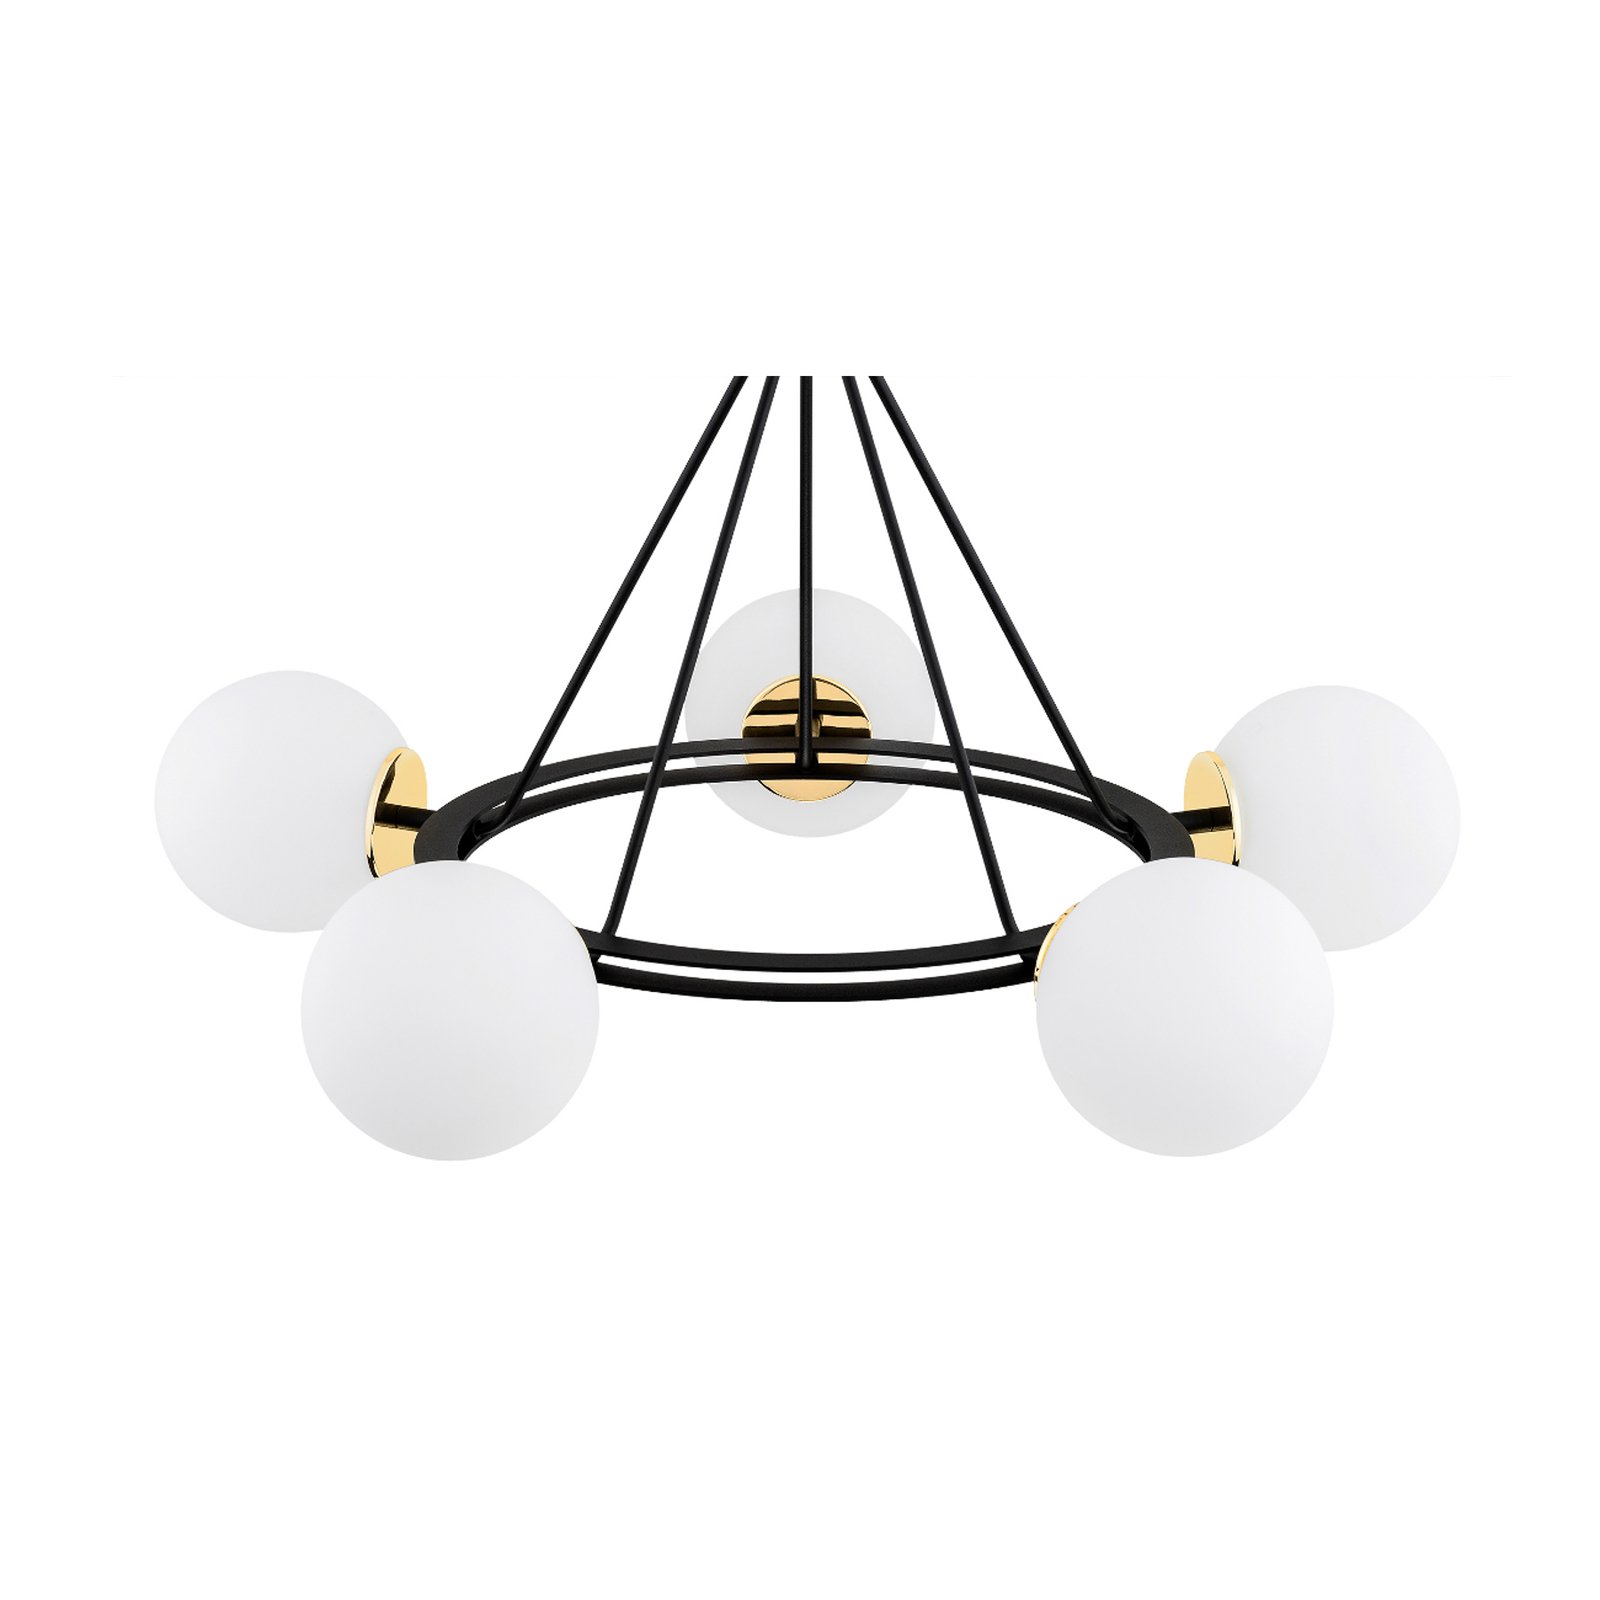 Hanglamp Amalfi, 5-lamps, witte glazen kappen